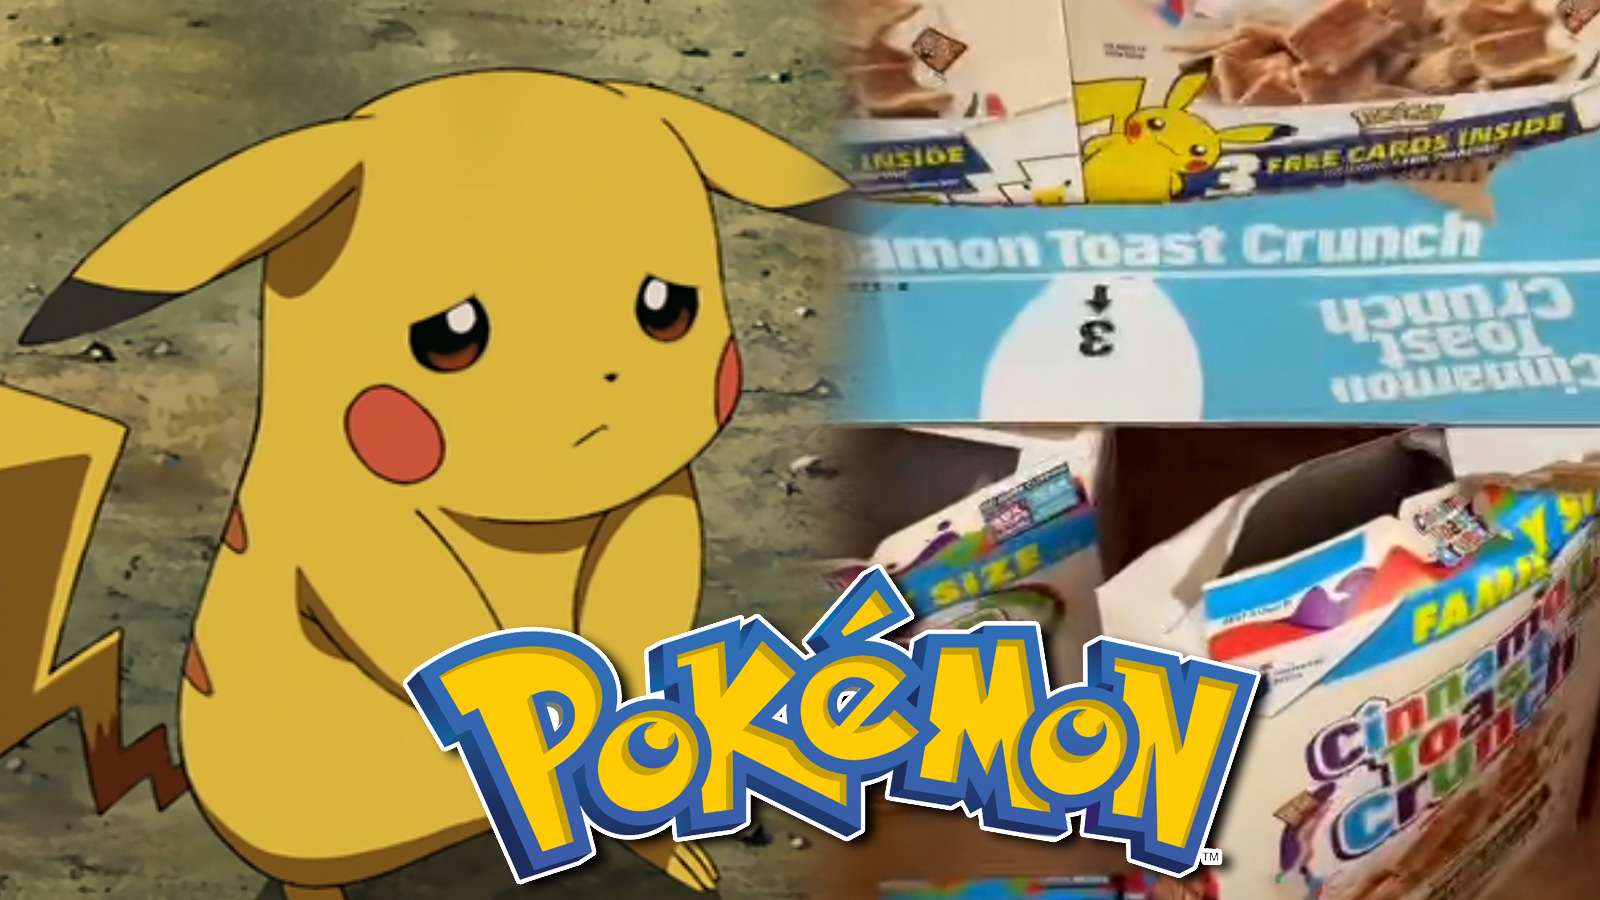 Screenshot of Pikachu next to broken cereal boxes.